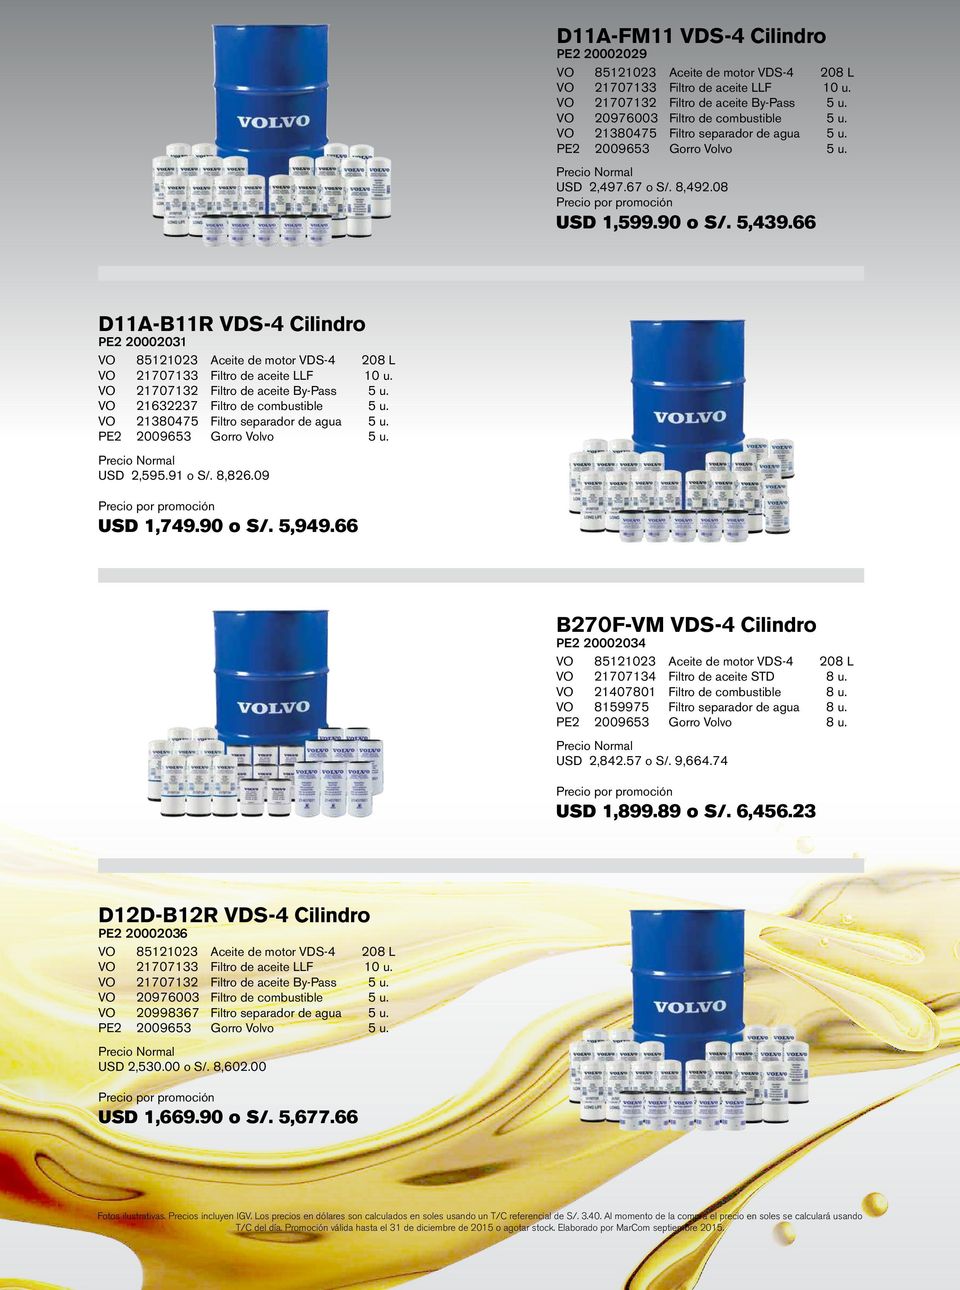 B270F-VM VDS-4 Cilindro 20002034 21707134 21407801 8159975 USD 2,842.57 o S/. 9,664.74 Filtro de aceite STD USD 1,899.